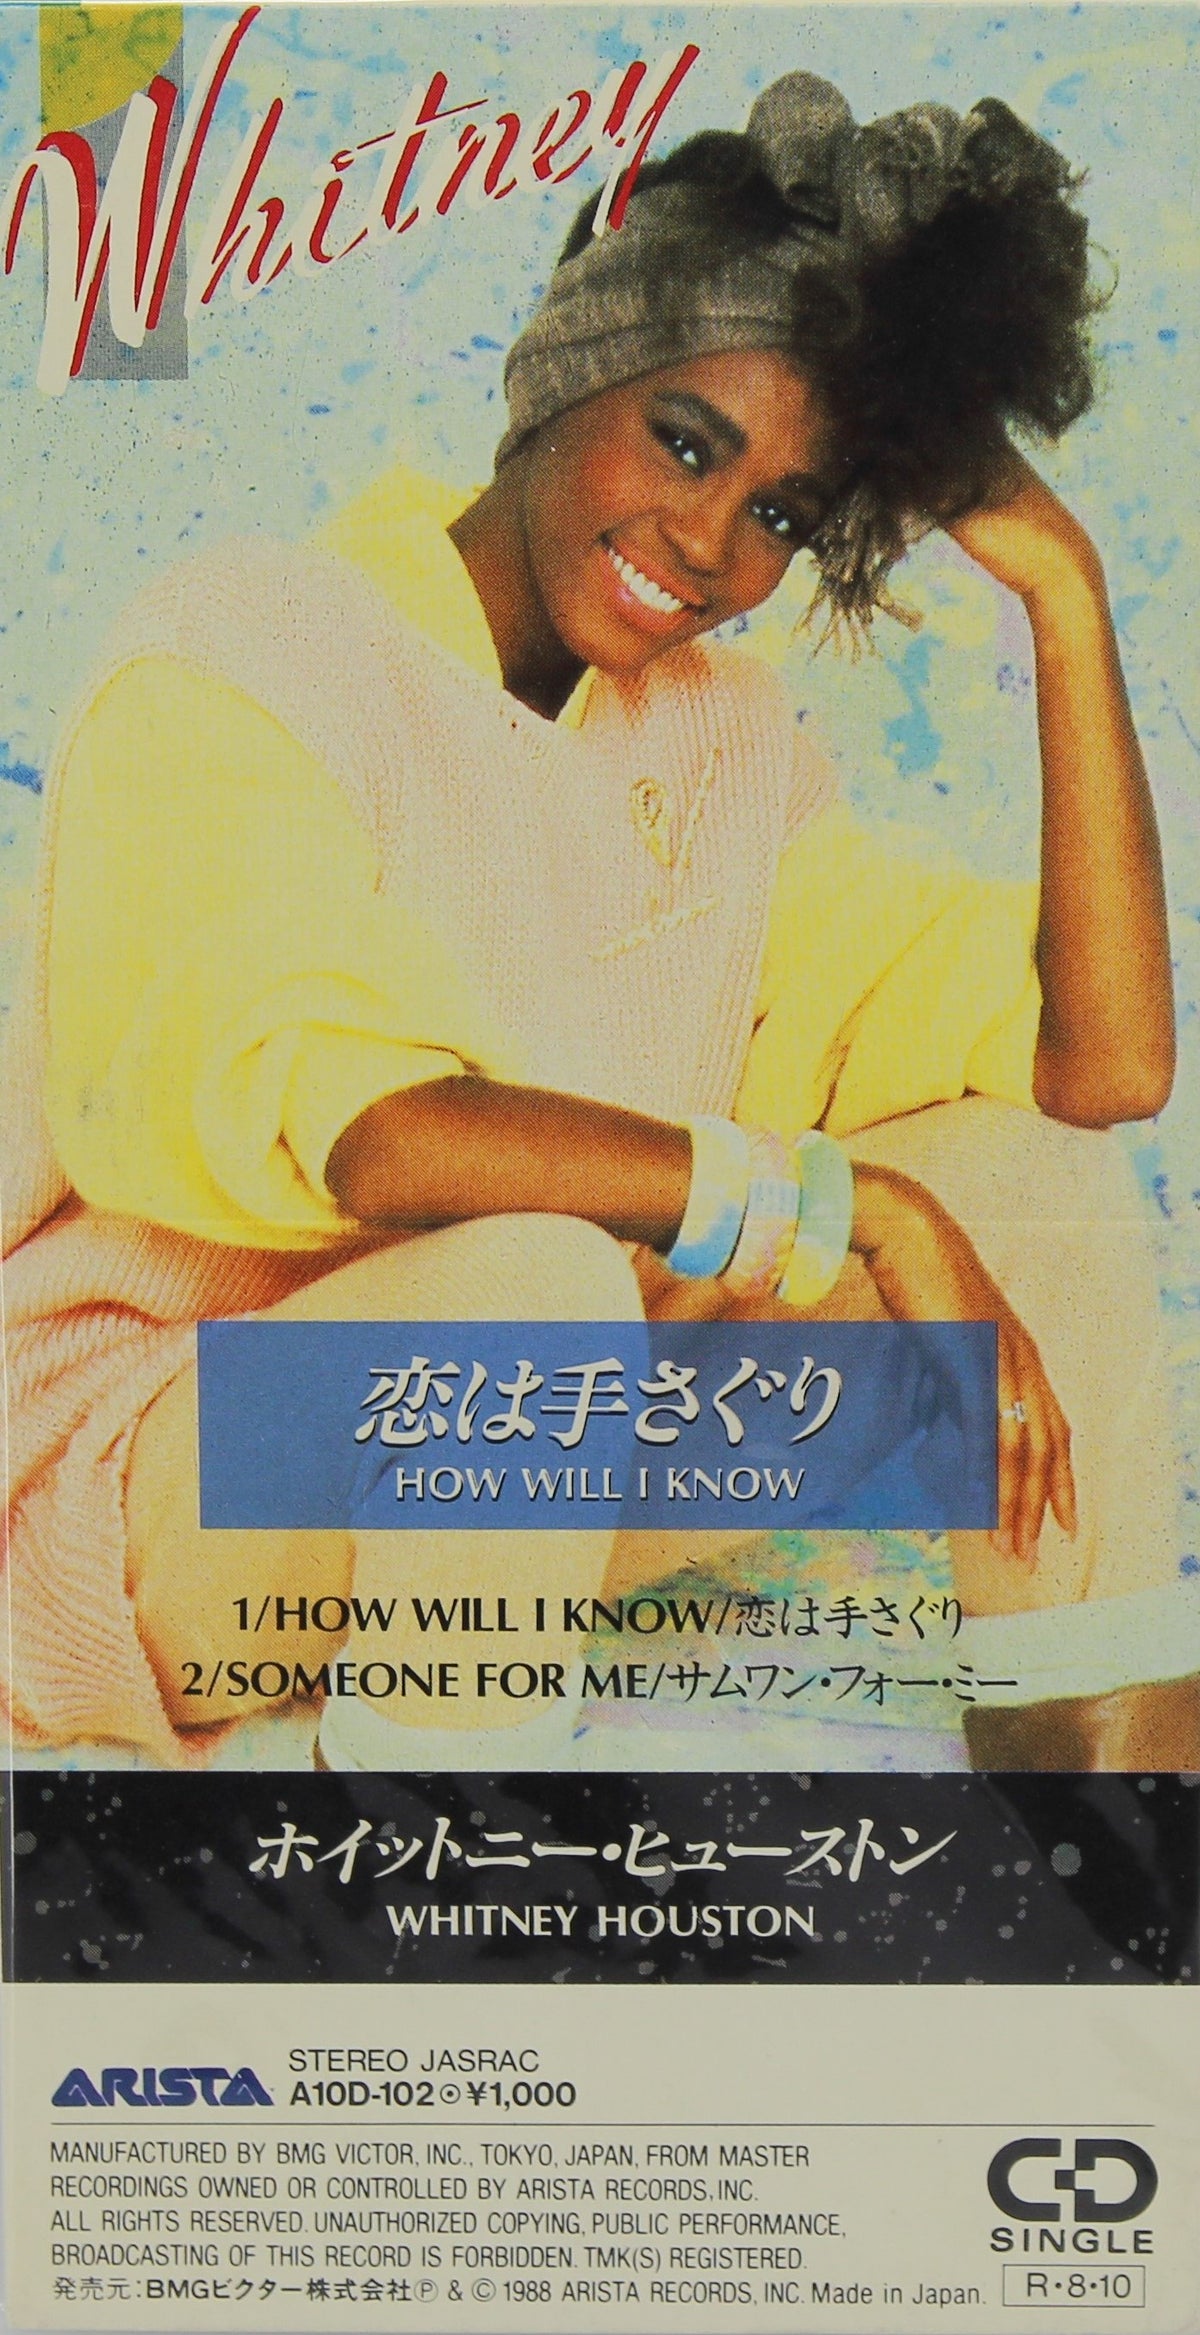 Whitney Houston – How Will I Know, CD, Single, Mini, Japan 1988